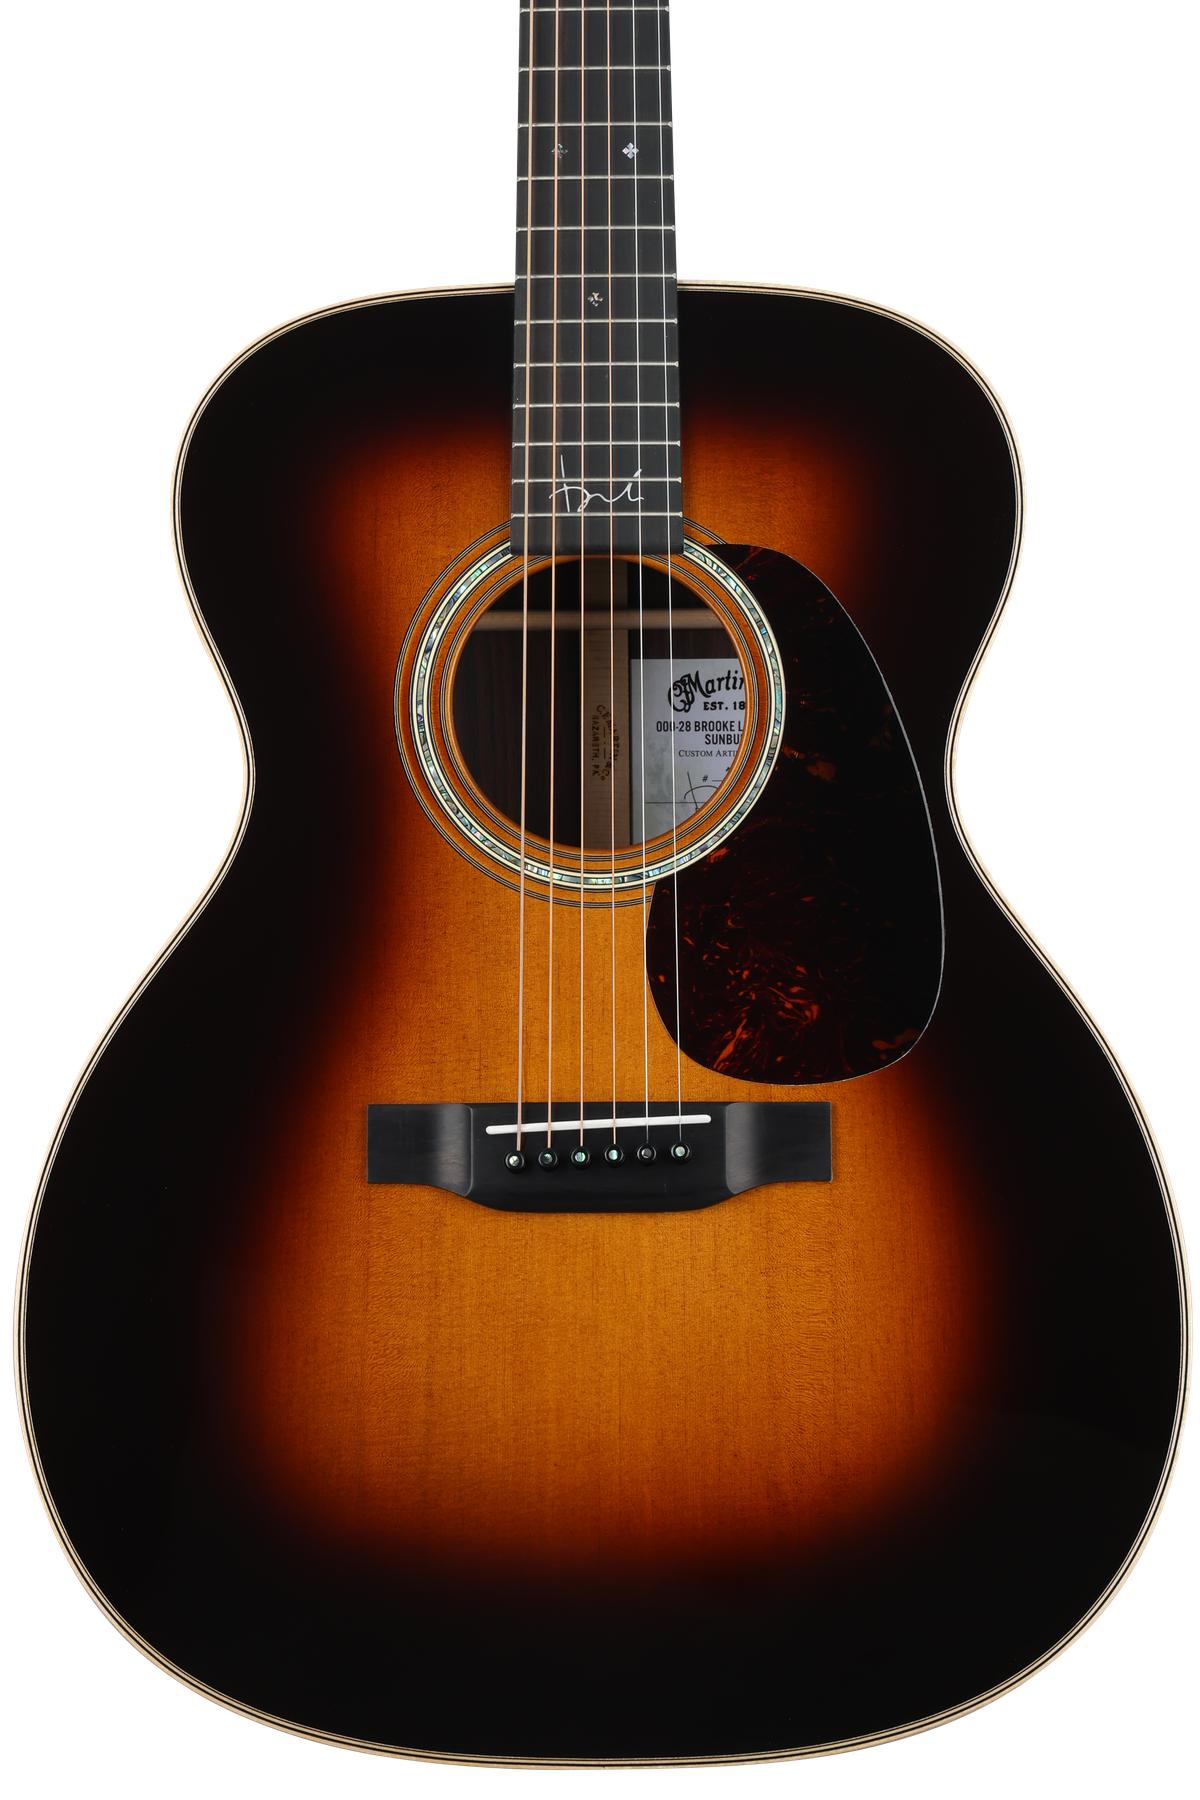 Martin 000-28 Brooke Ligertwood Signature Acoustic Guitar - Sunburst